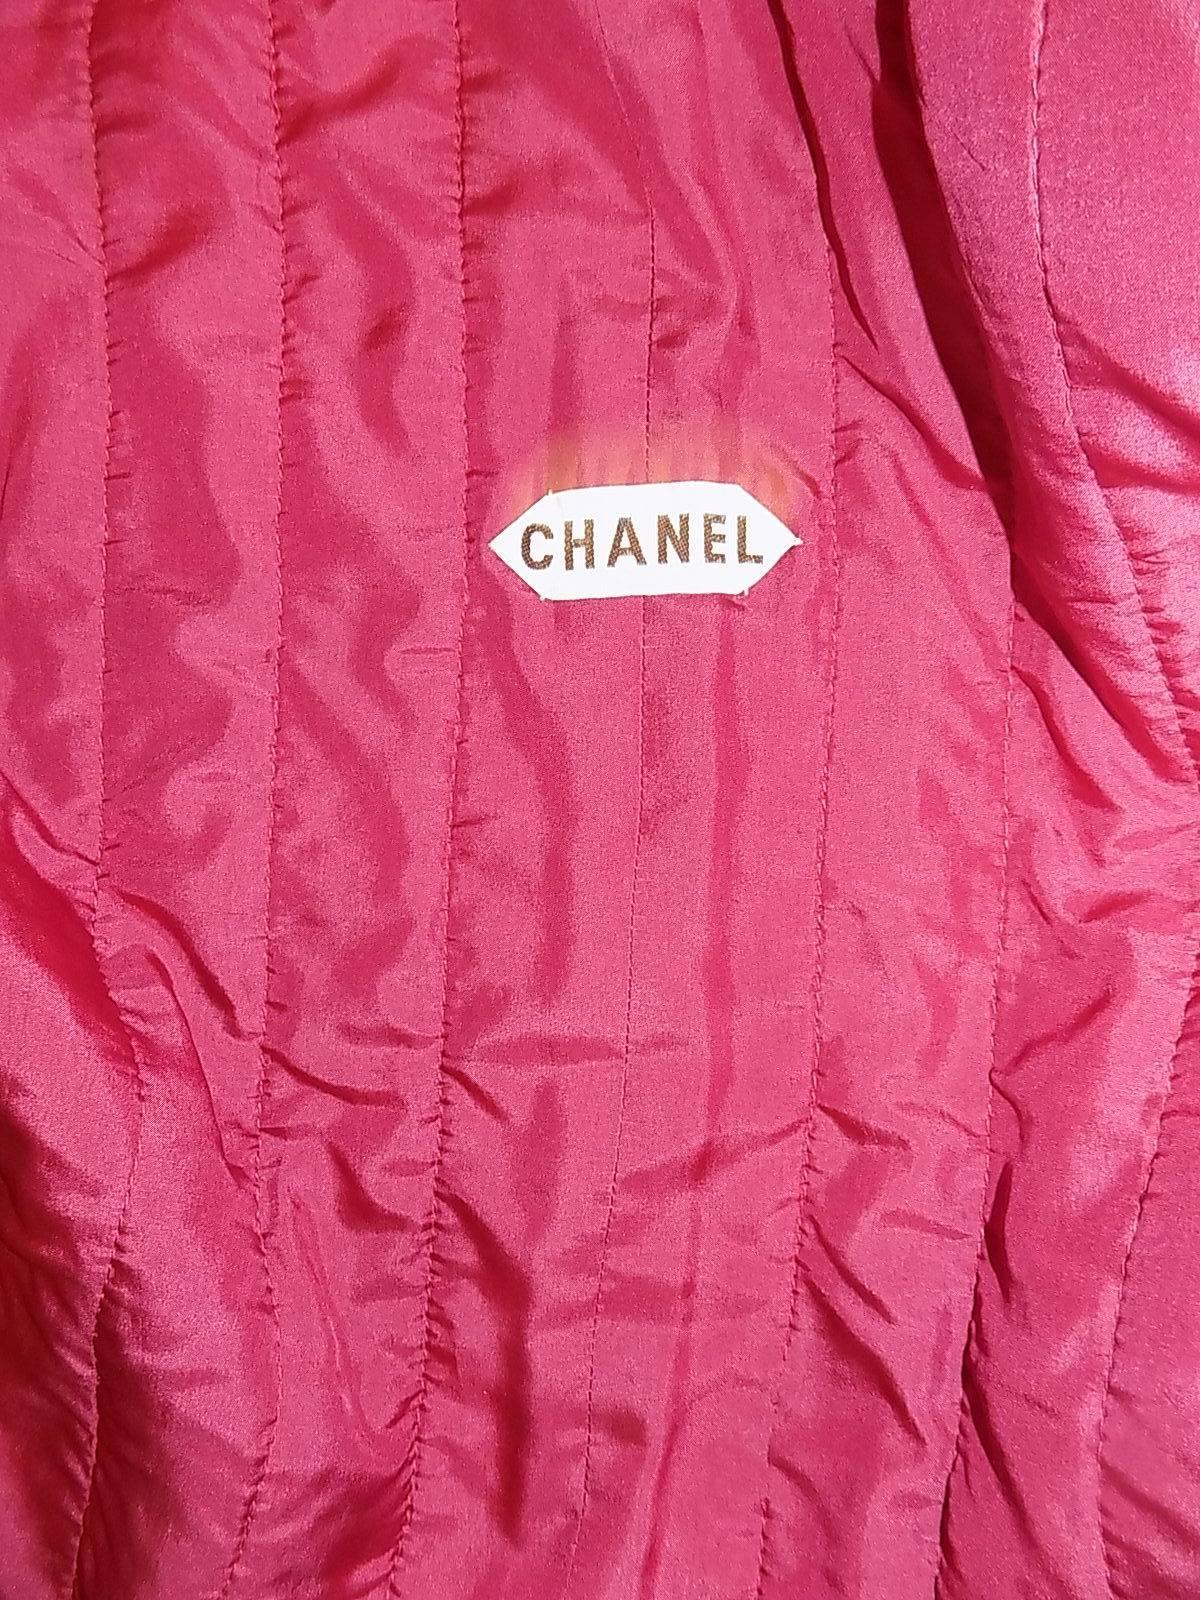 Chanel Vintage Haute Couture raspberry color skirt suit For Sale 6